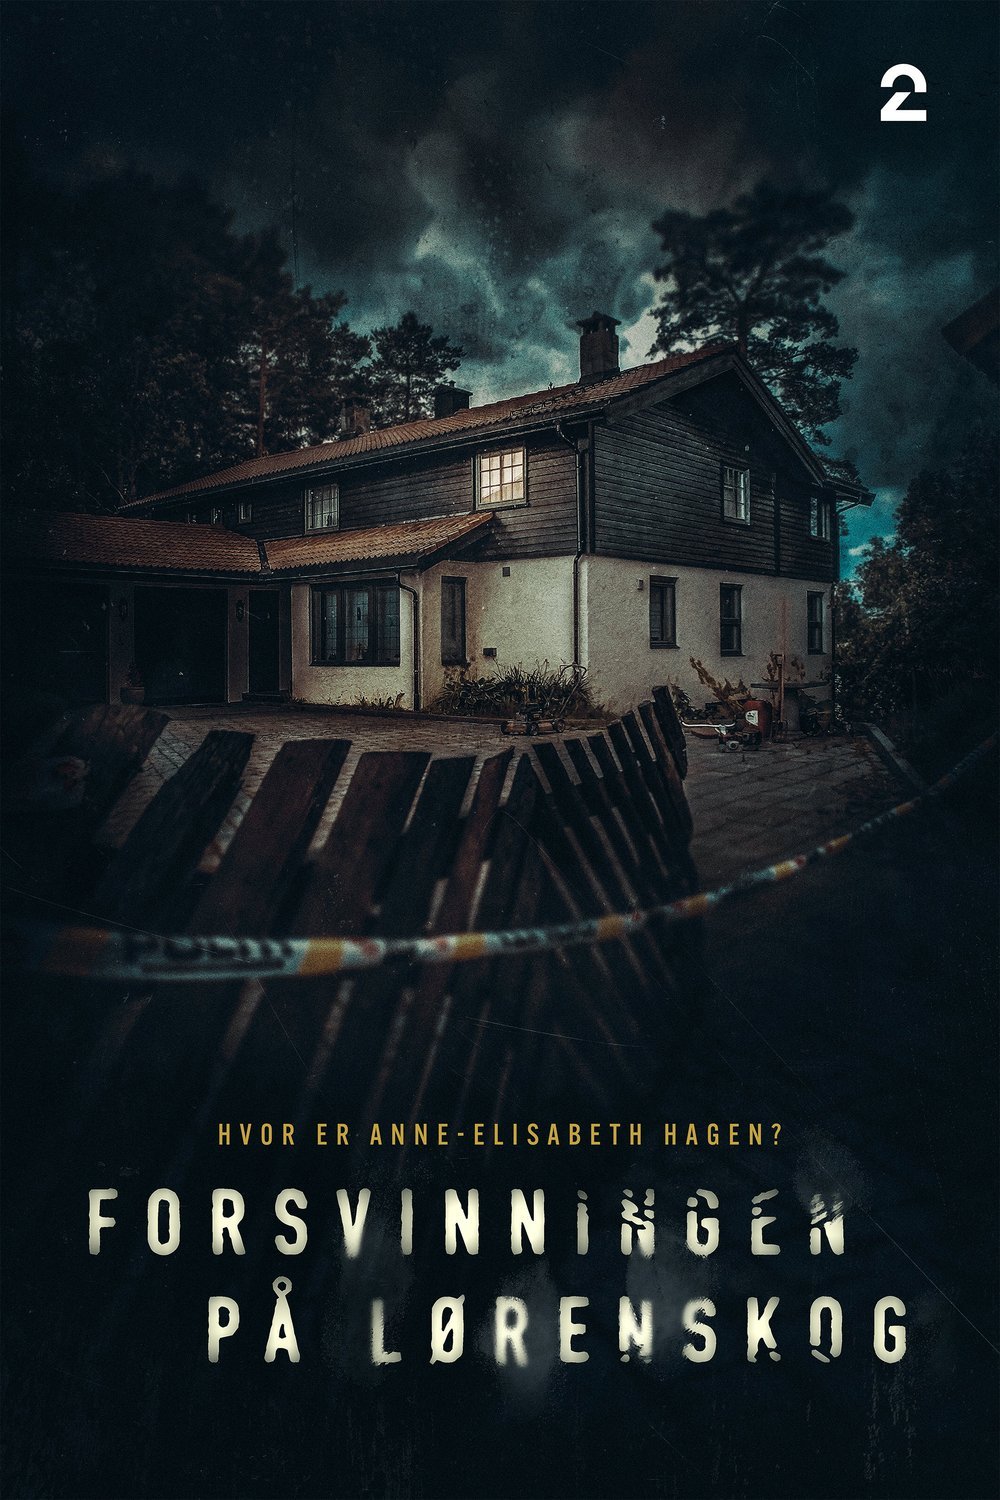 L'affiche originale du film The Lorenskog Disappearance en norvégien